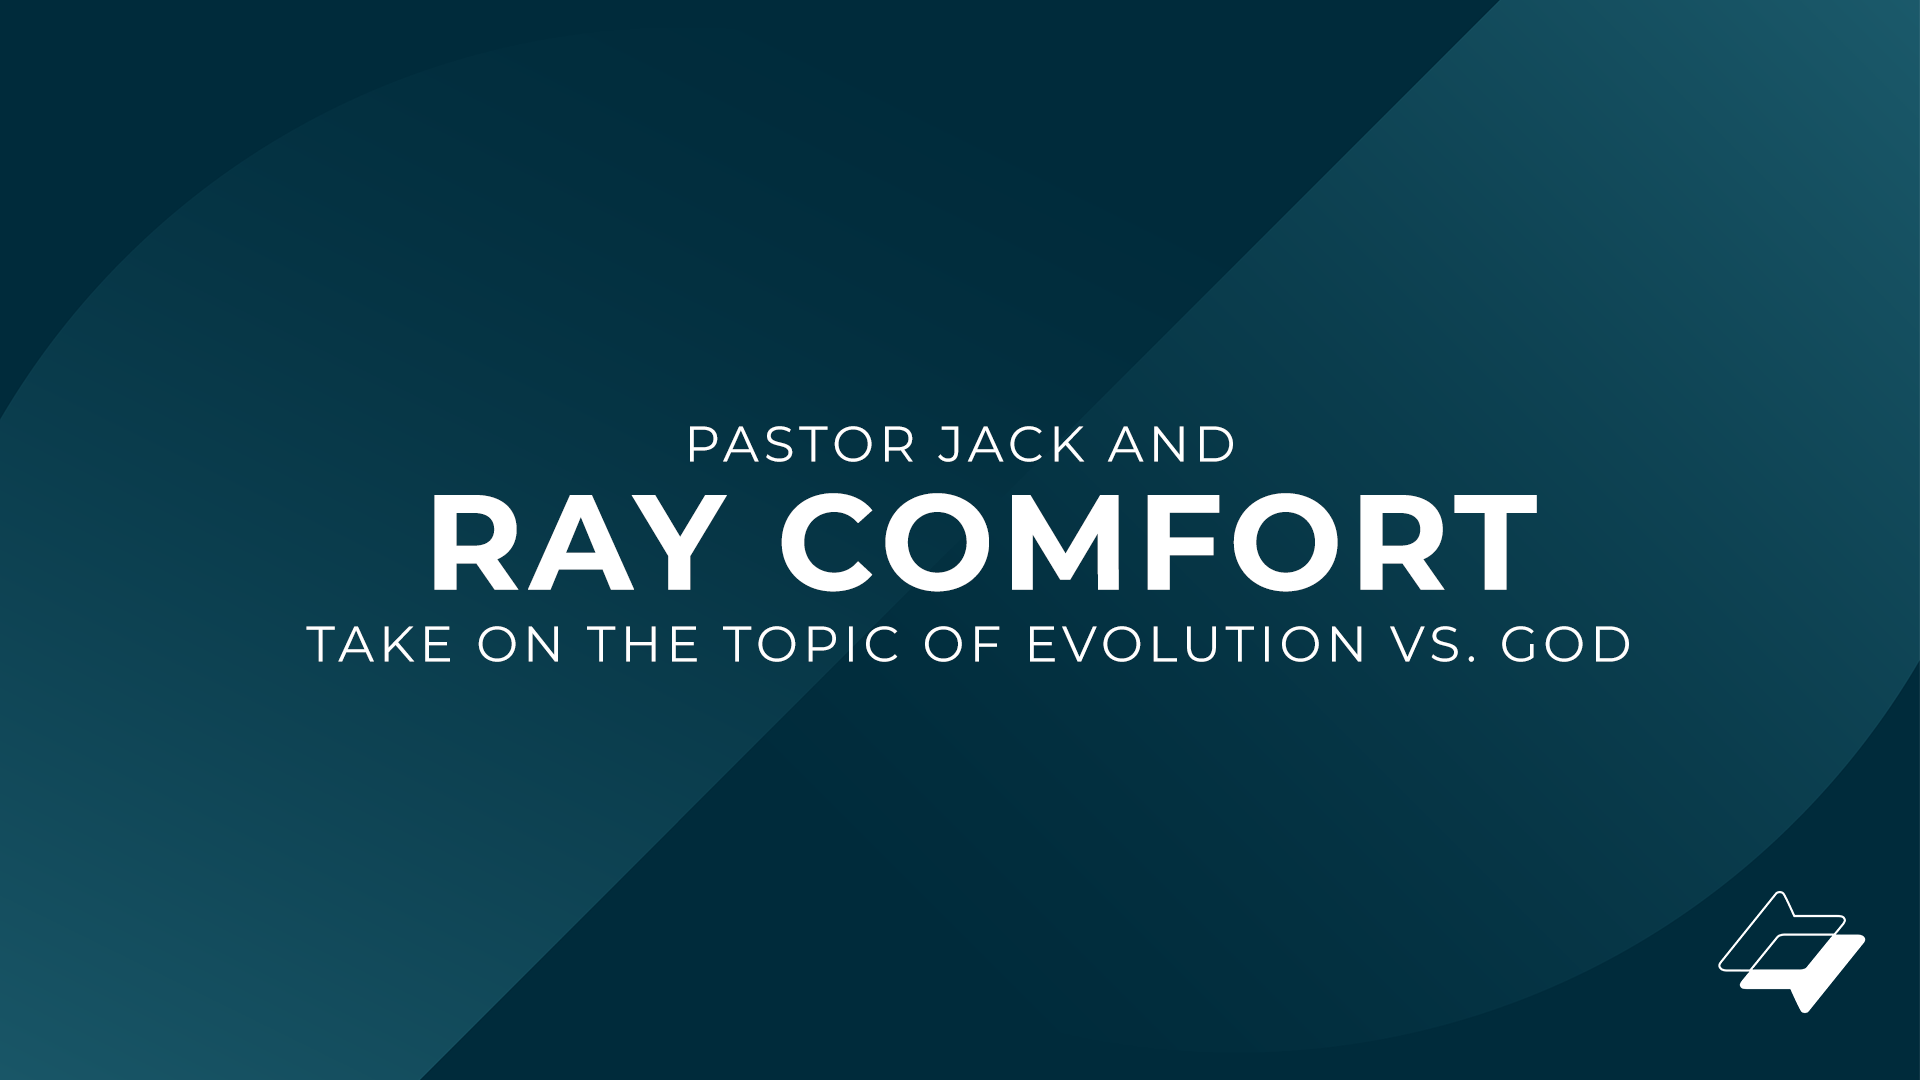 Pastor Jack and Ray Comfort take on the topic of Evolution vs. God